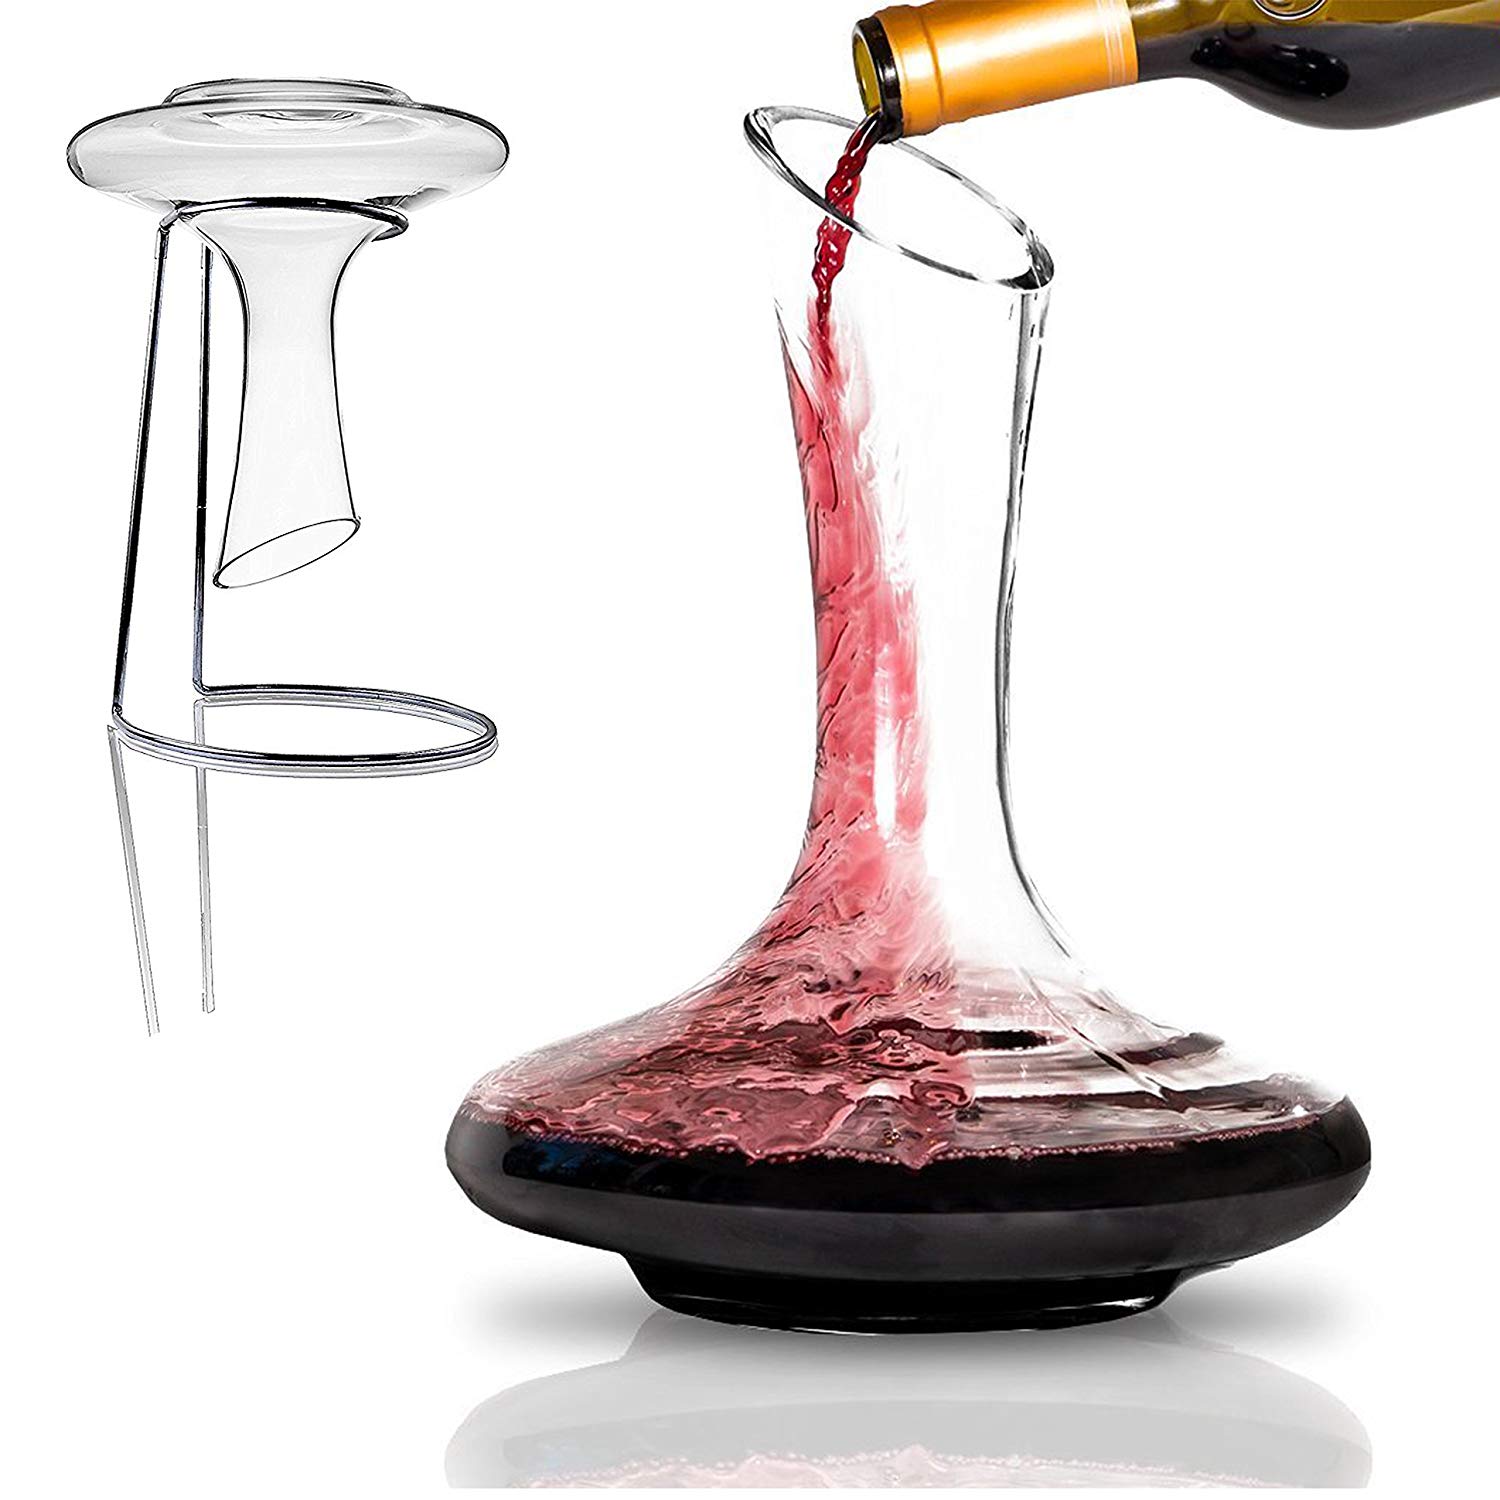 purpose of a wine decanter